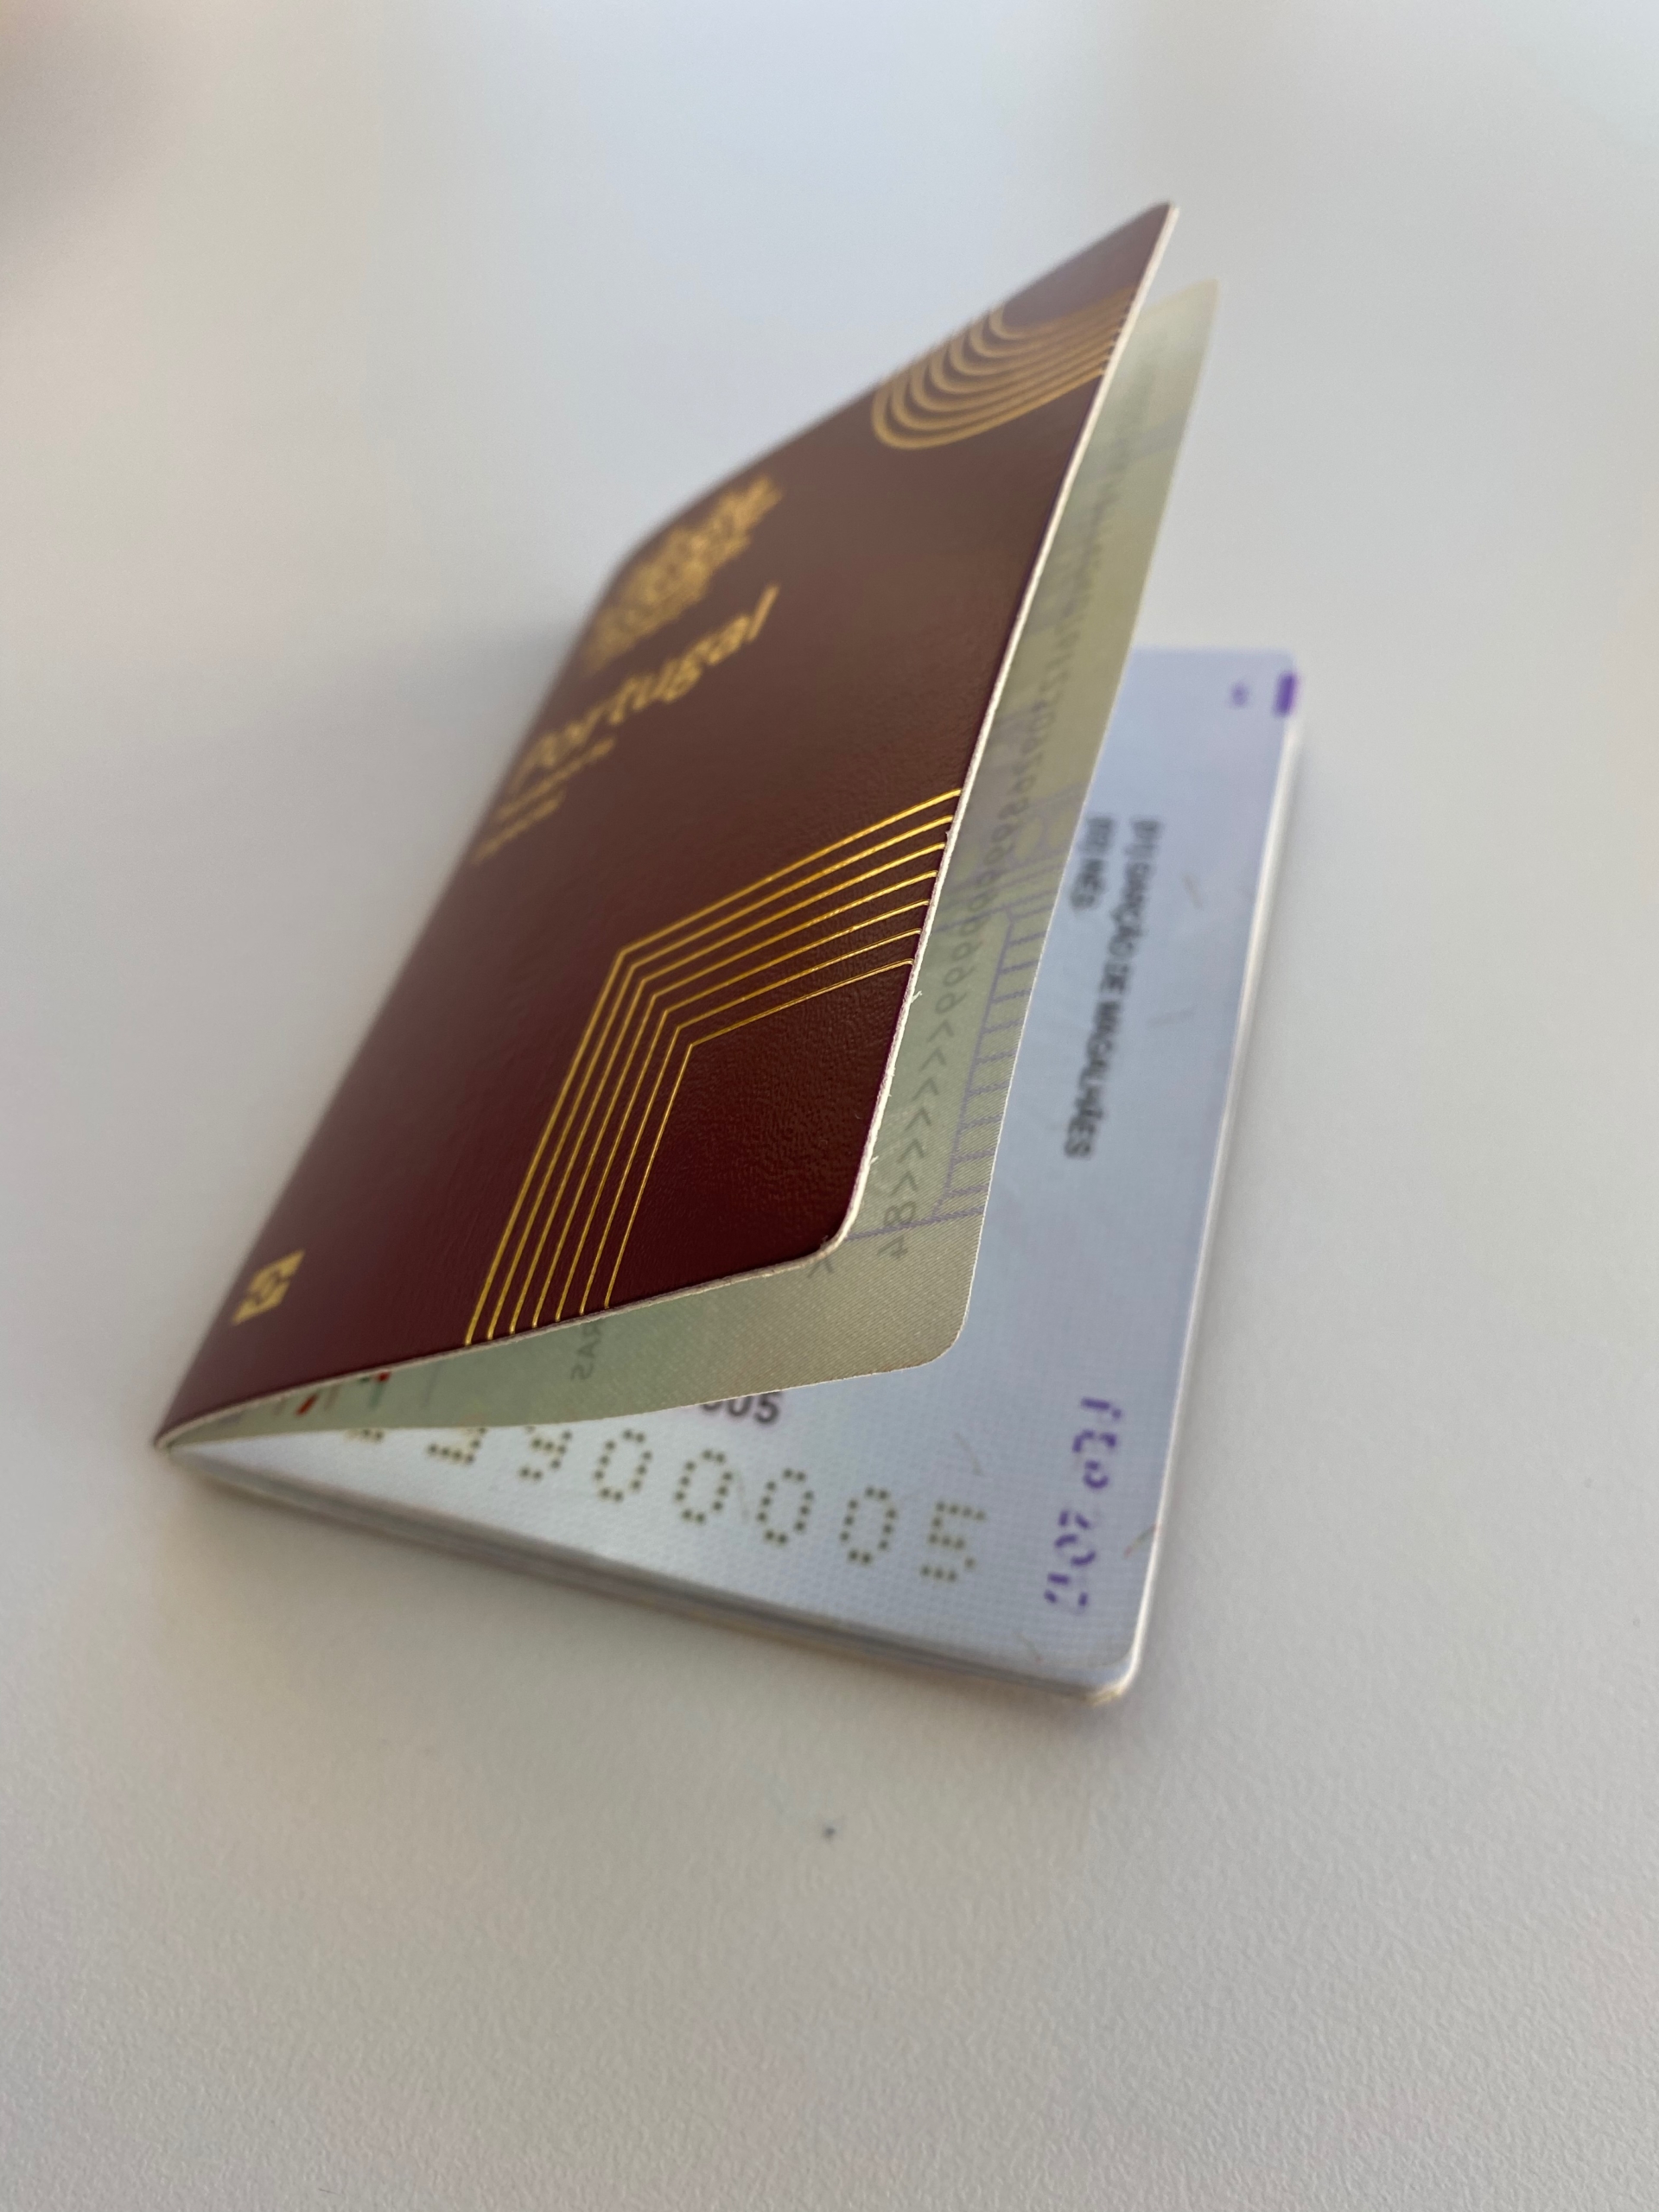 Passport used for quality control from Imprensa Nacional